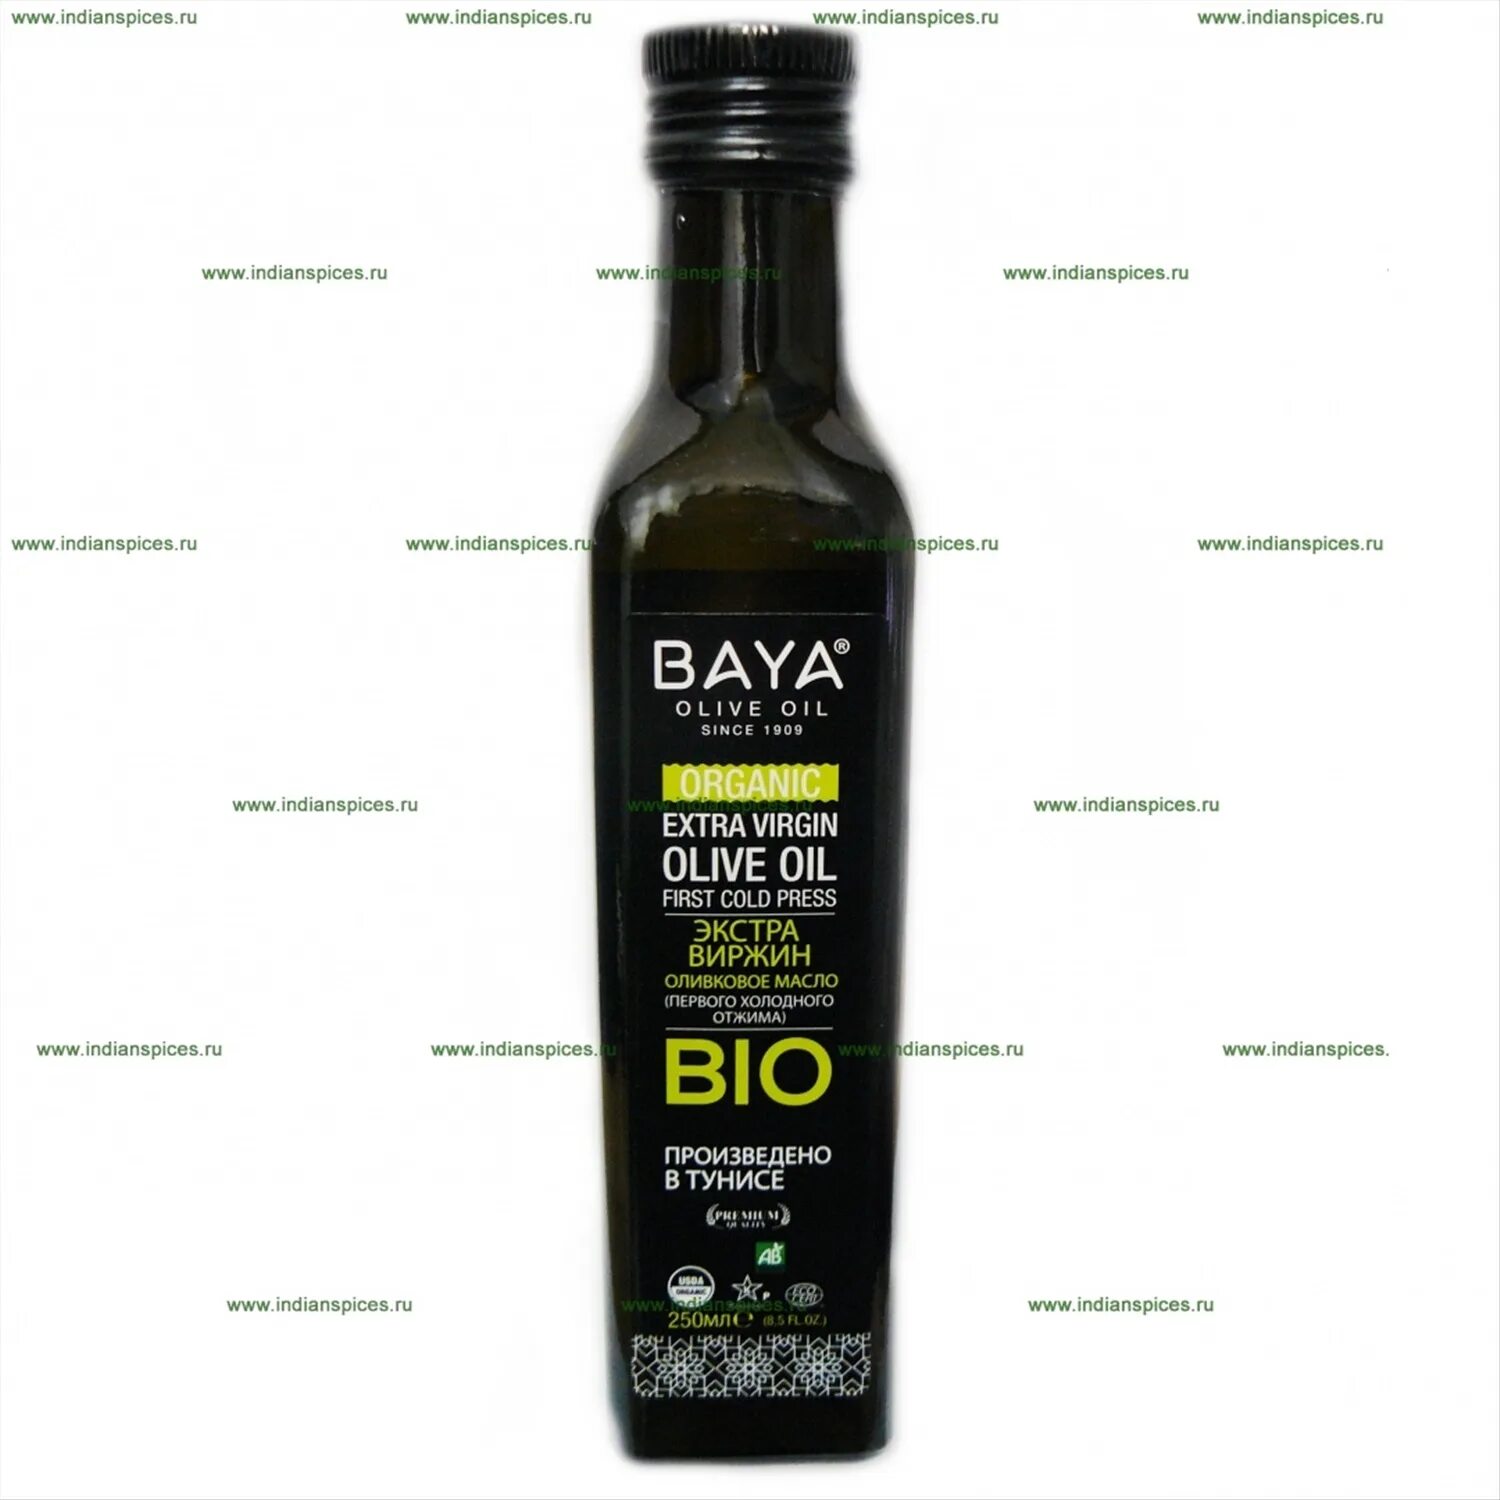 Baya масло оливковое. Olitalia масло оливковое. Оливковое масло био. Масло оливковое Bio. Оливковое масло baya